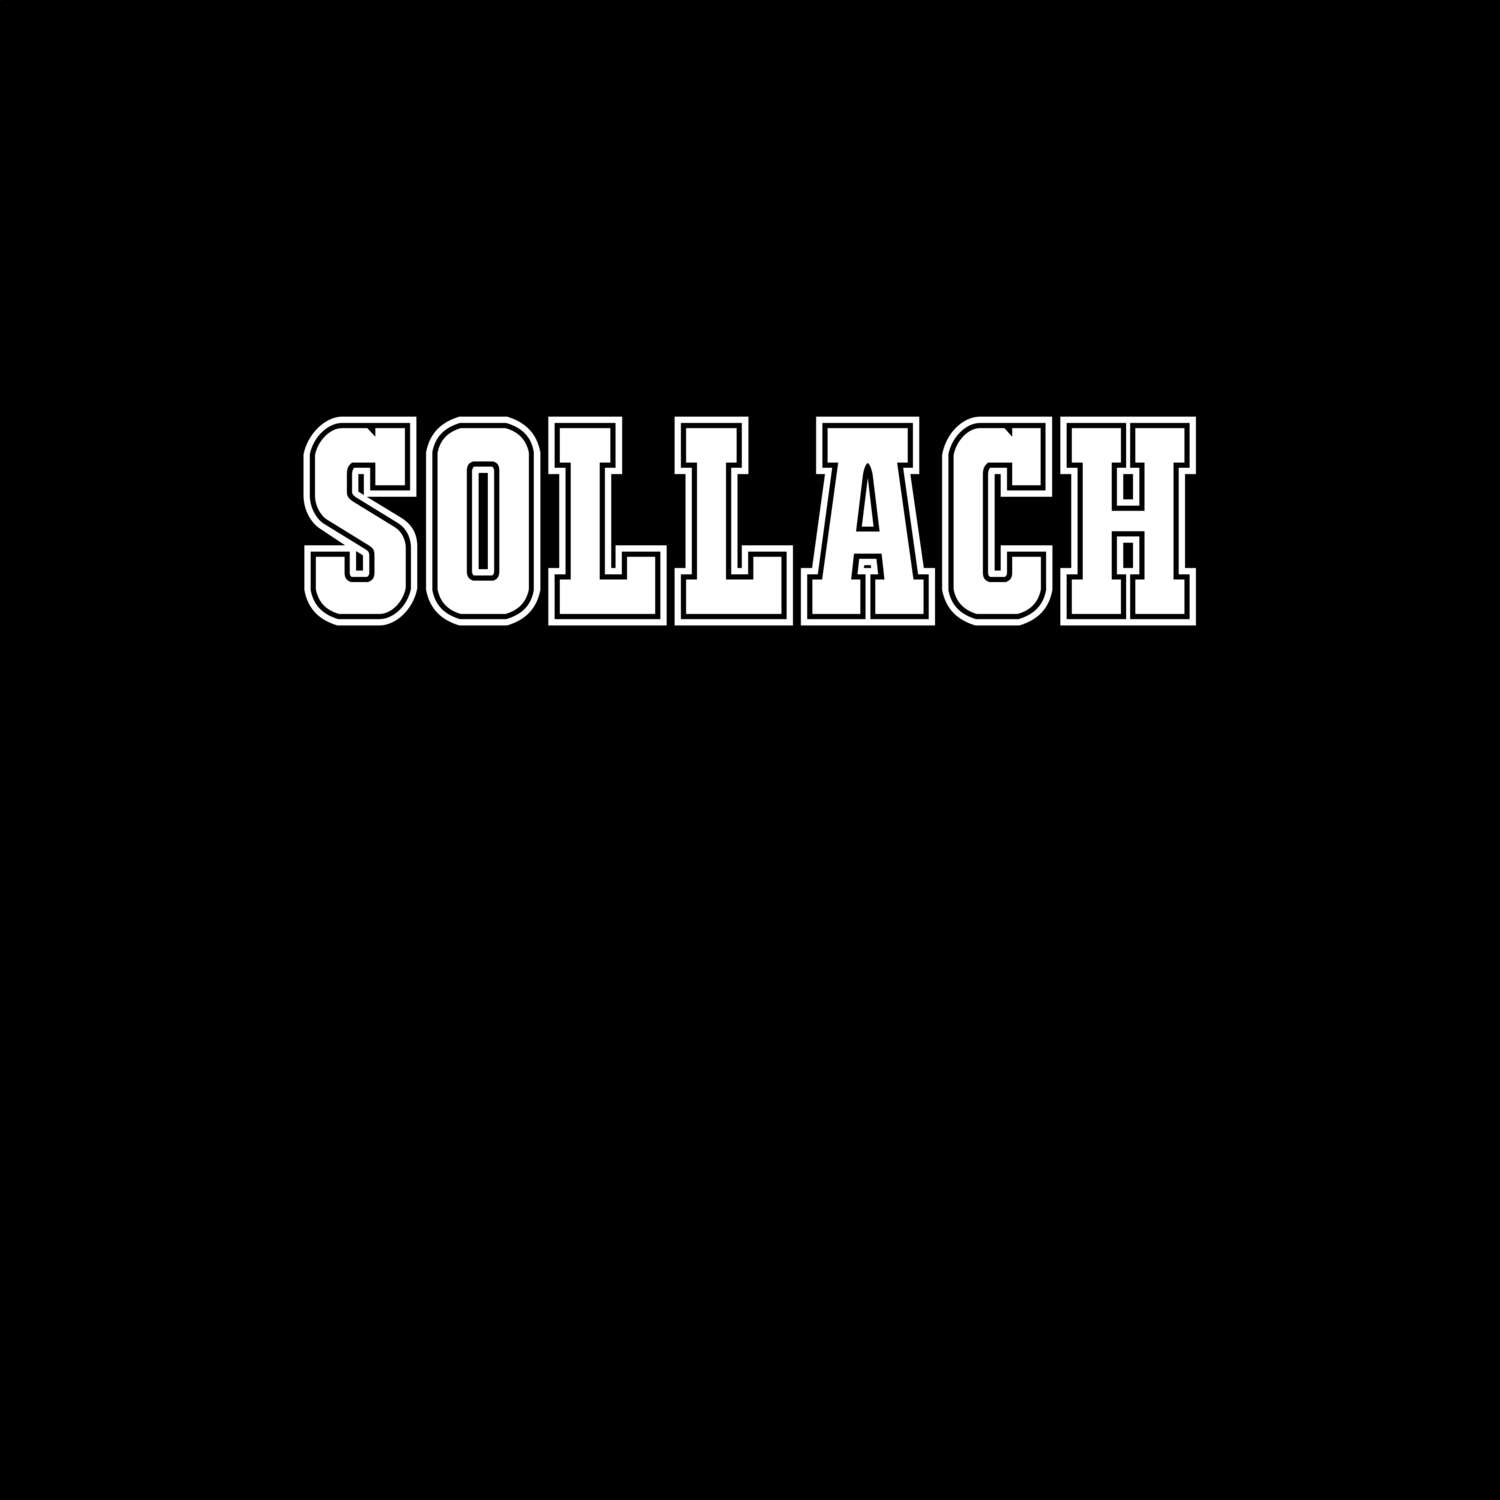 Sollach T-Shirt »Classic«